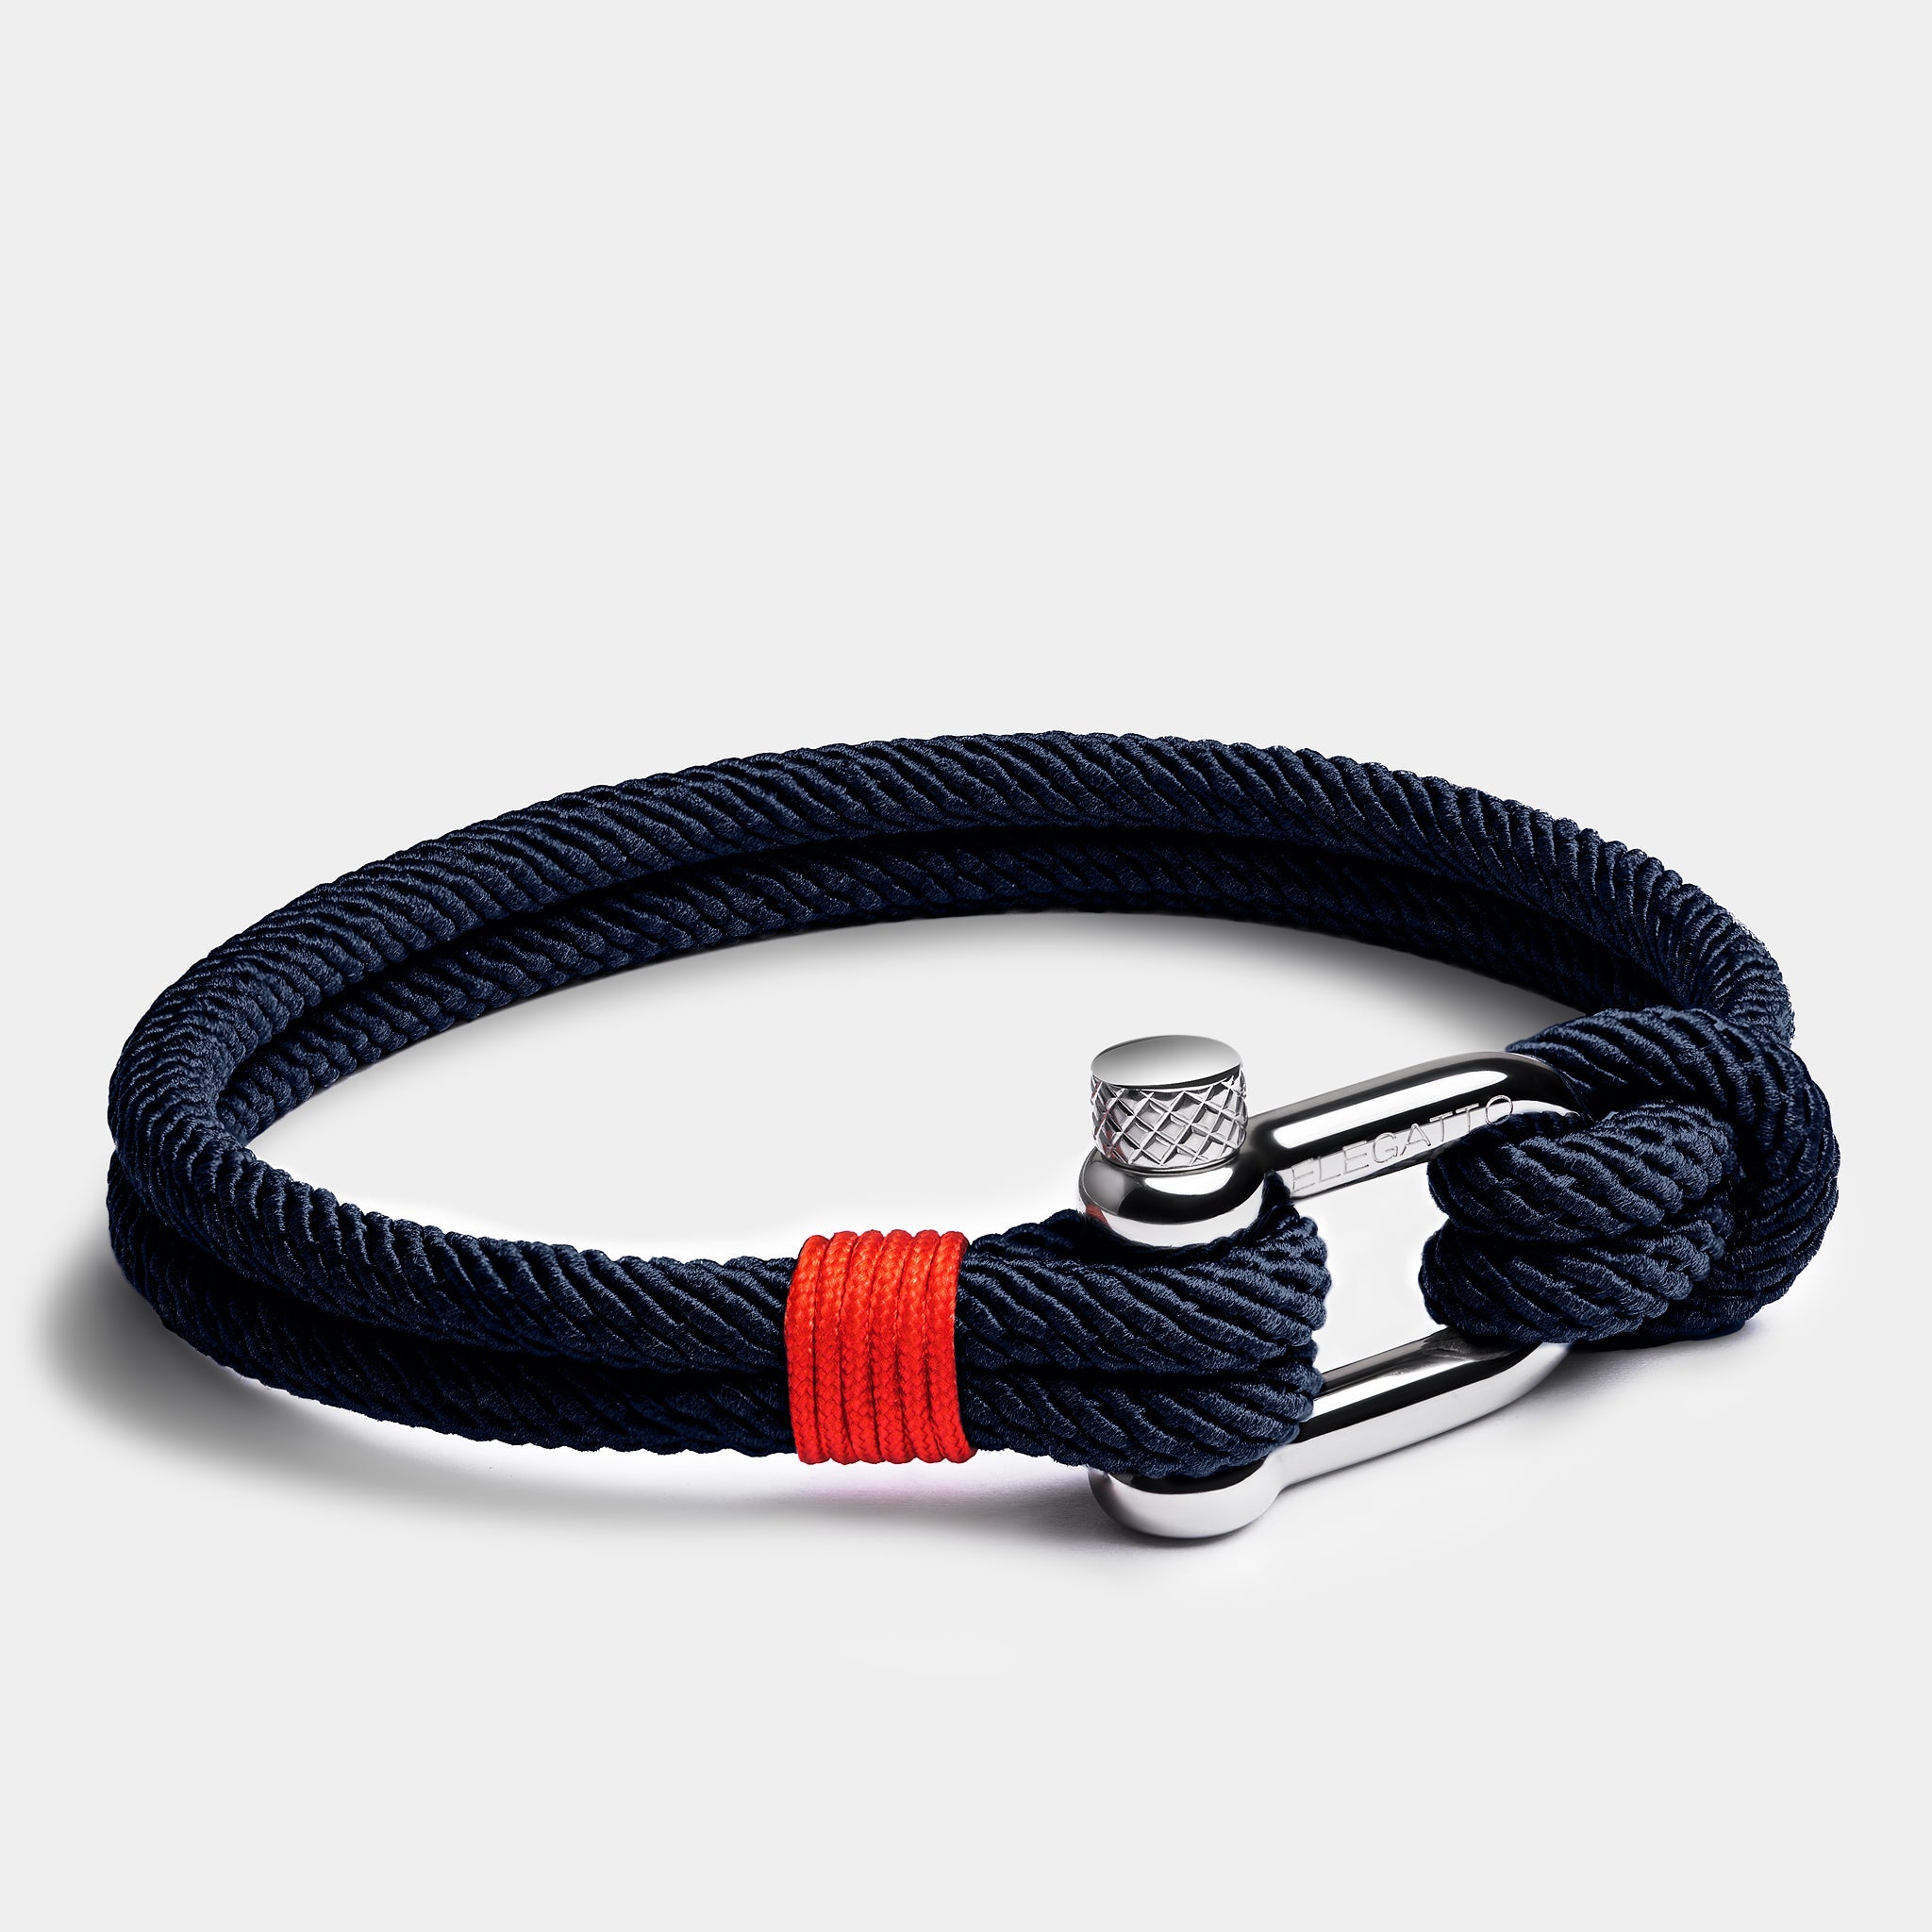 Breathtaking Nautical Rope Bracelet for Ultimate Elegance